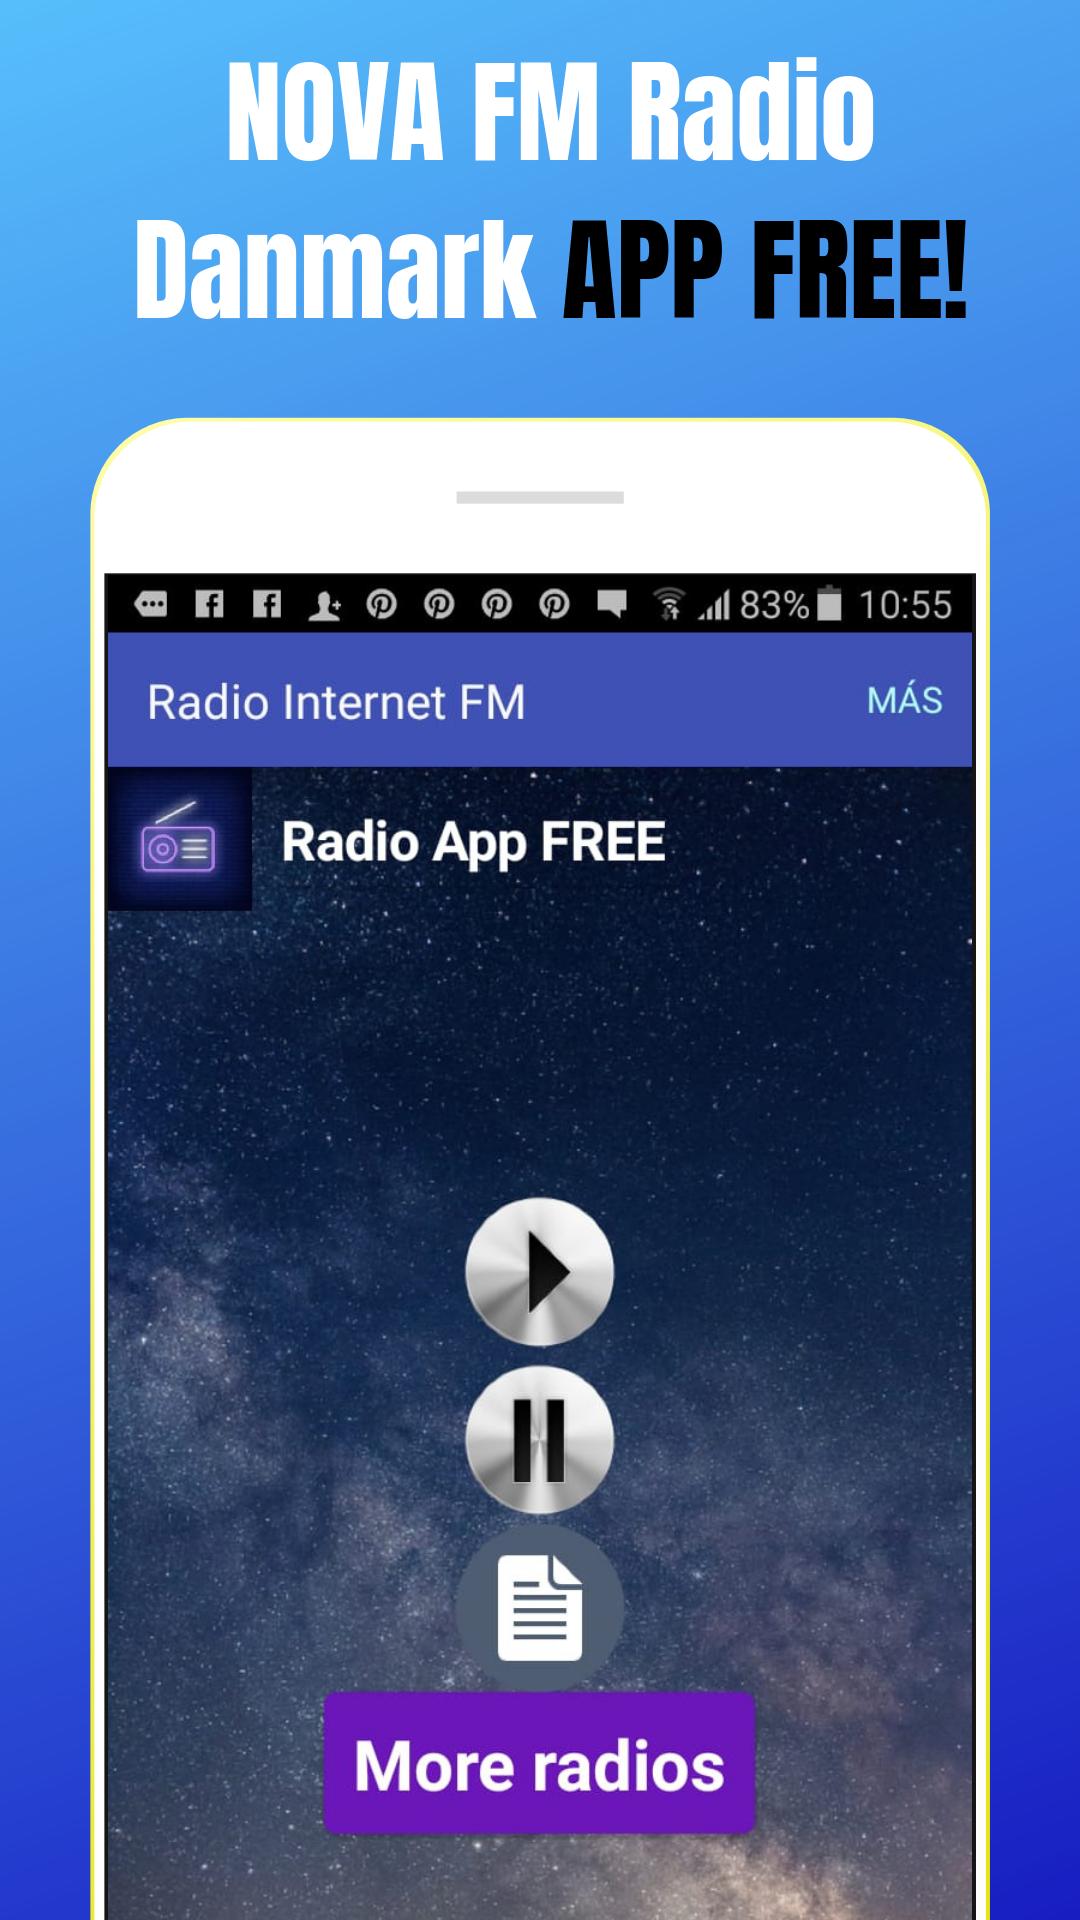 NOVA FM Radio Danmark App DK Free Online for Android - APK Download